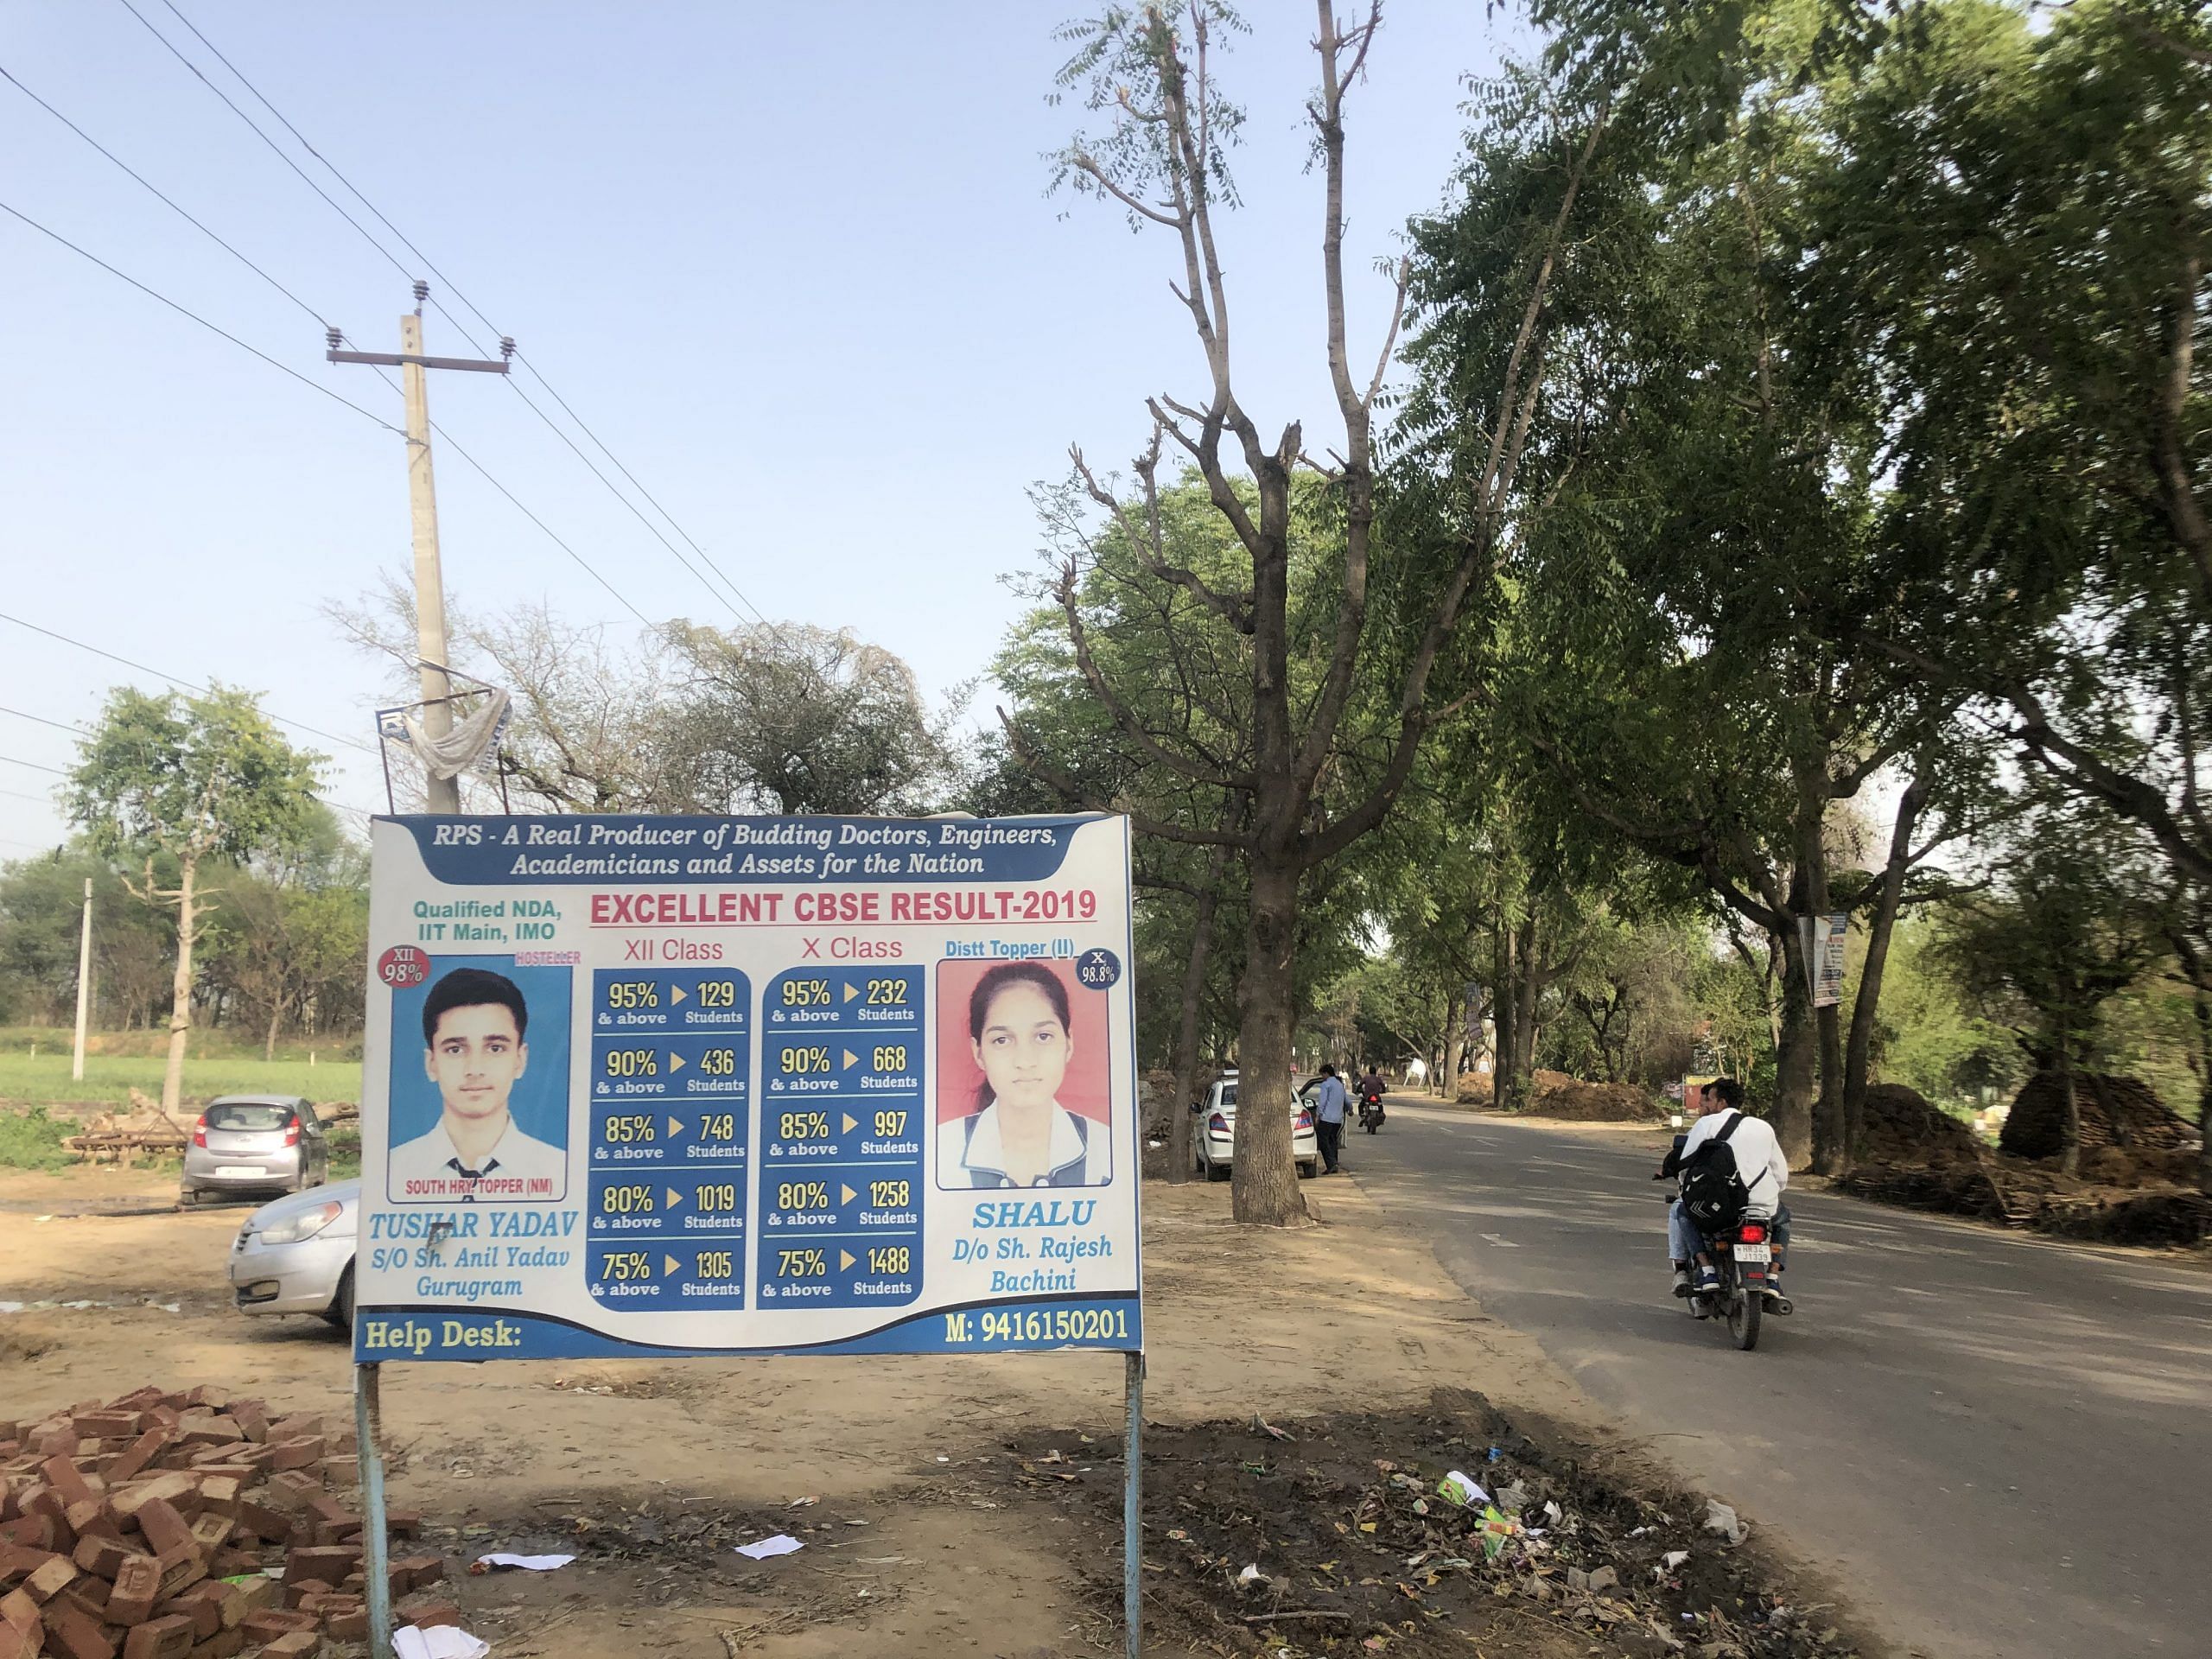 Hoardings advertise the toppers of each schooling's Mahendragarh | Photo: Jyotiraditya Yadav | ThePrint